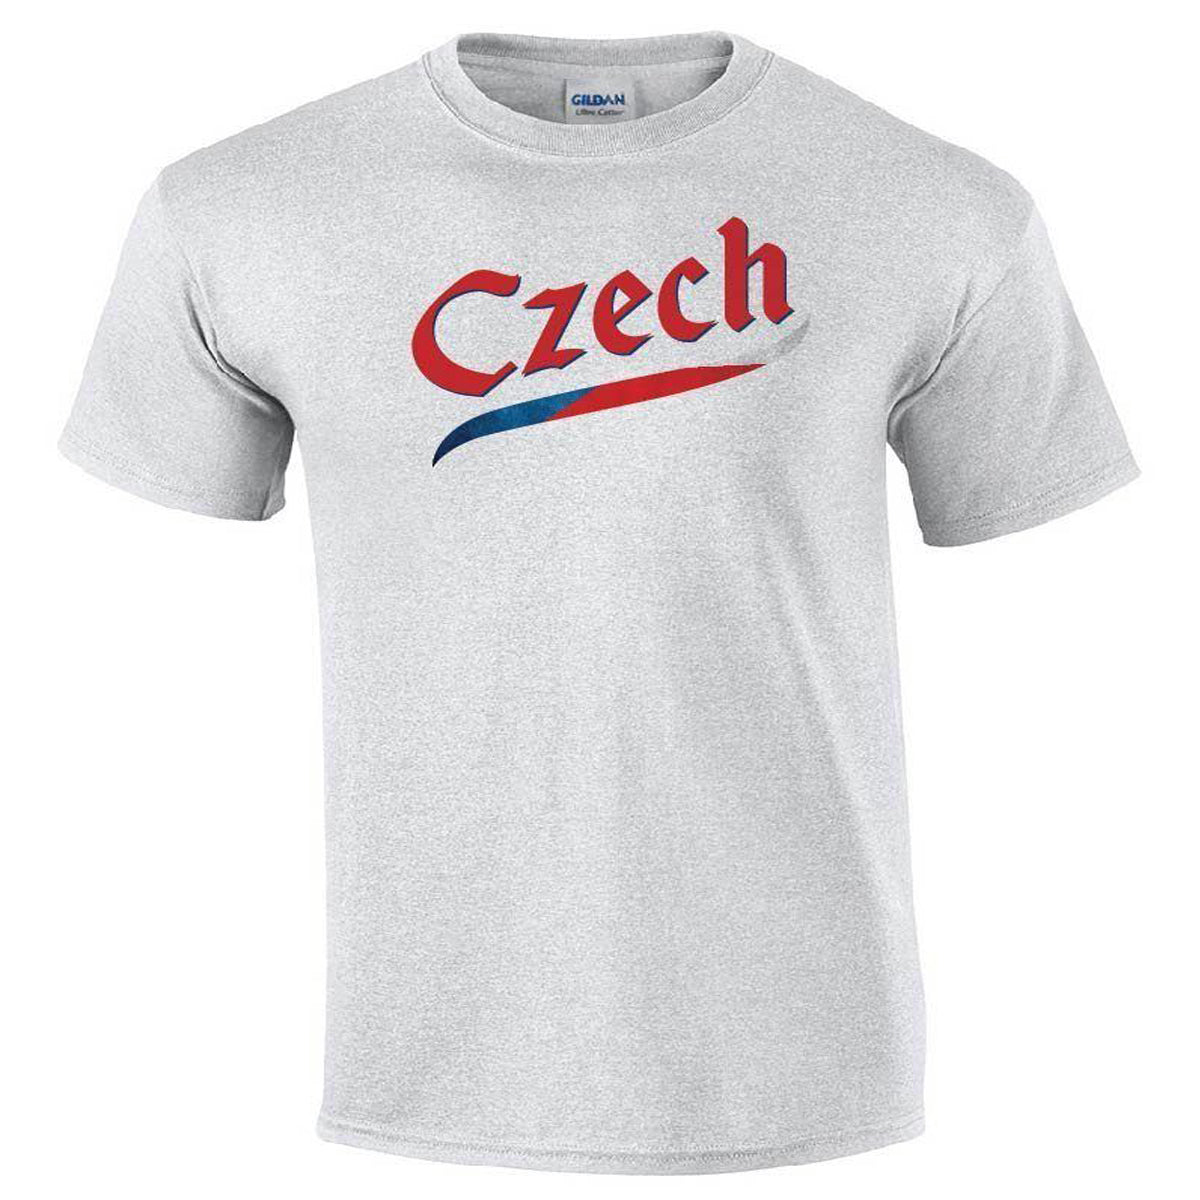 Czech Republic Script World Cup 2022 Printed Tee T-shirts 411 Youth Medium Ash Youth